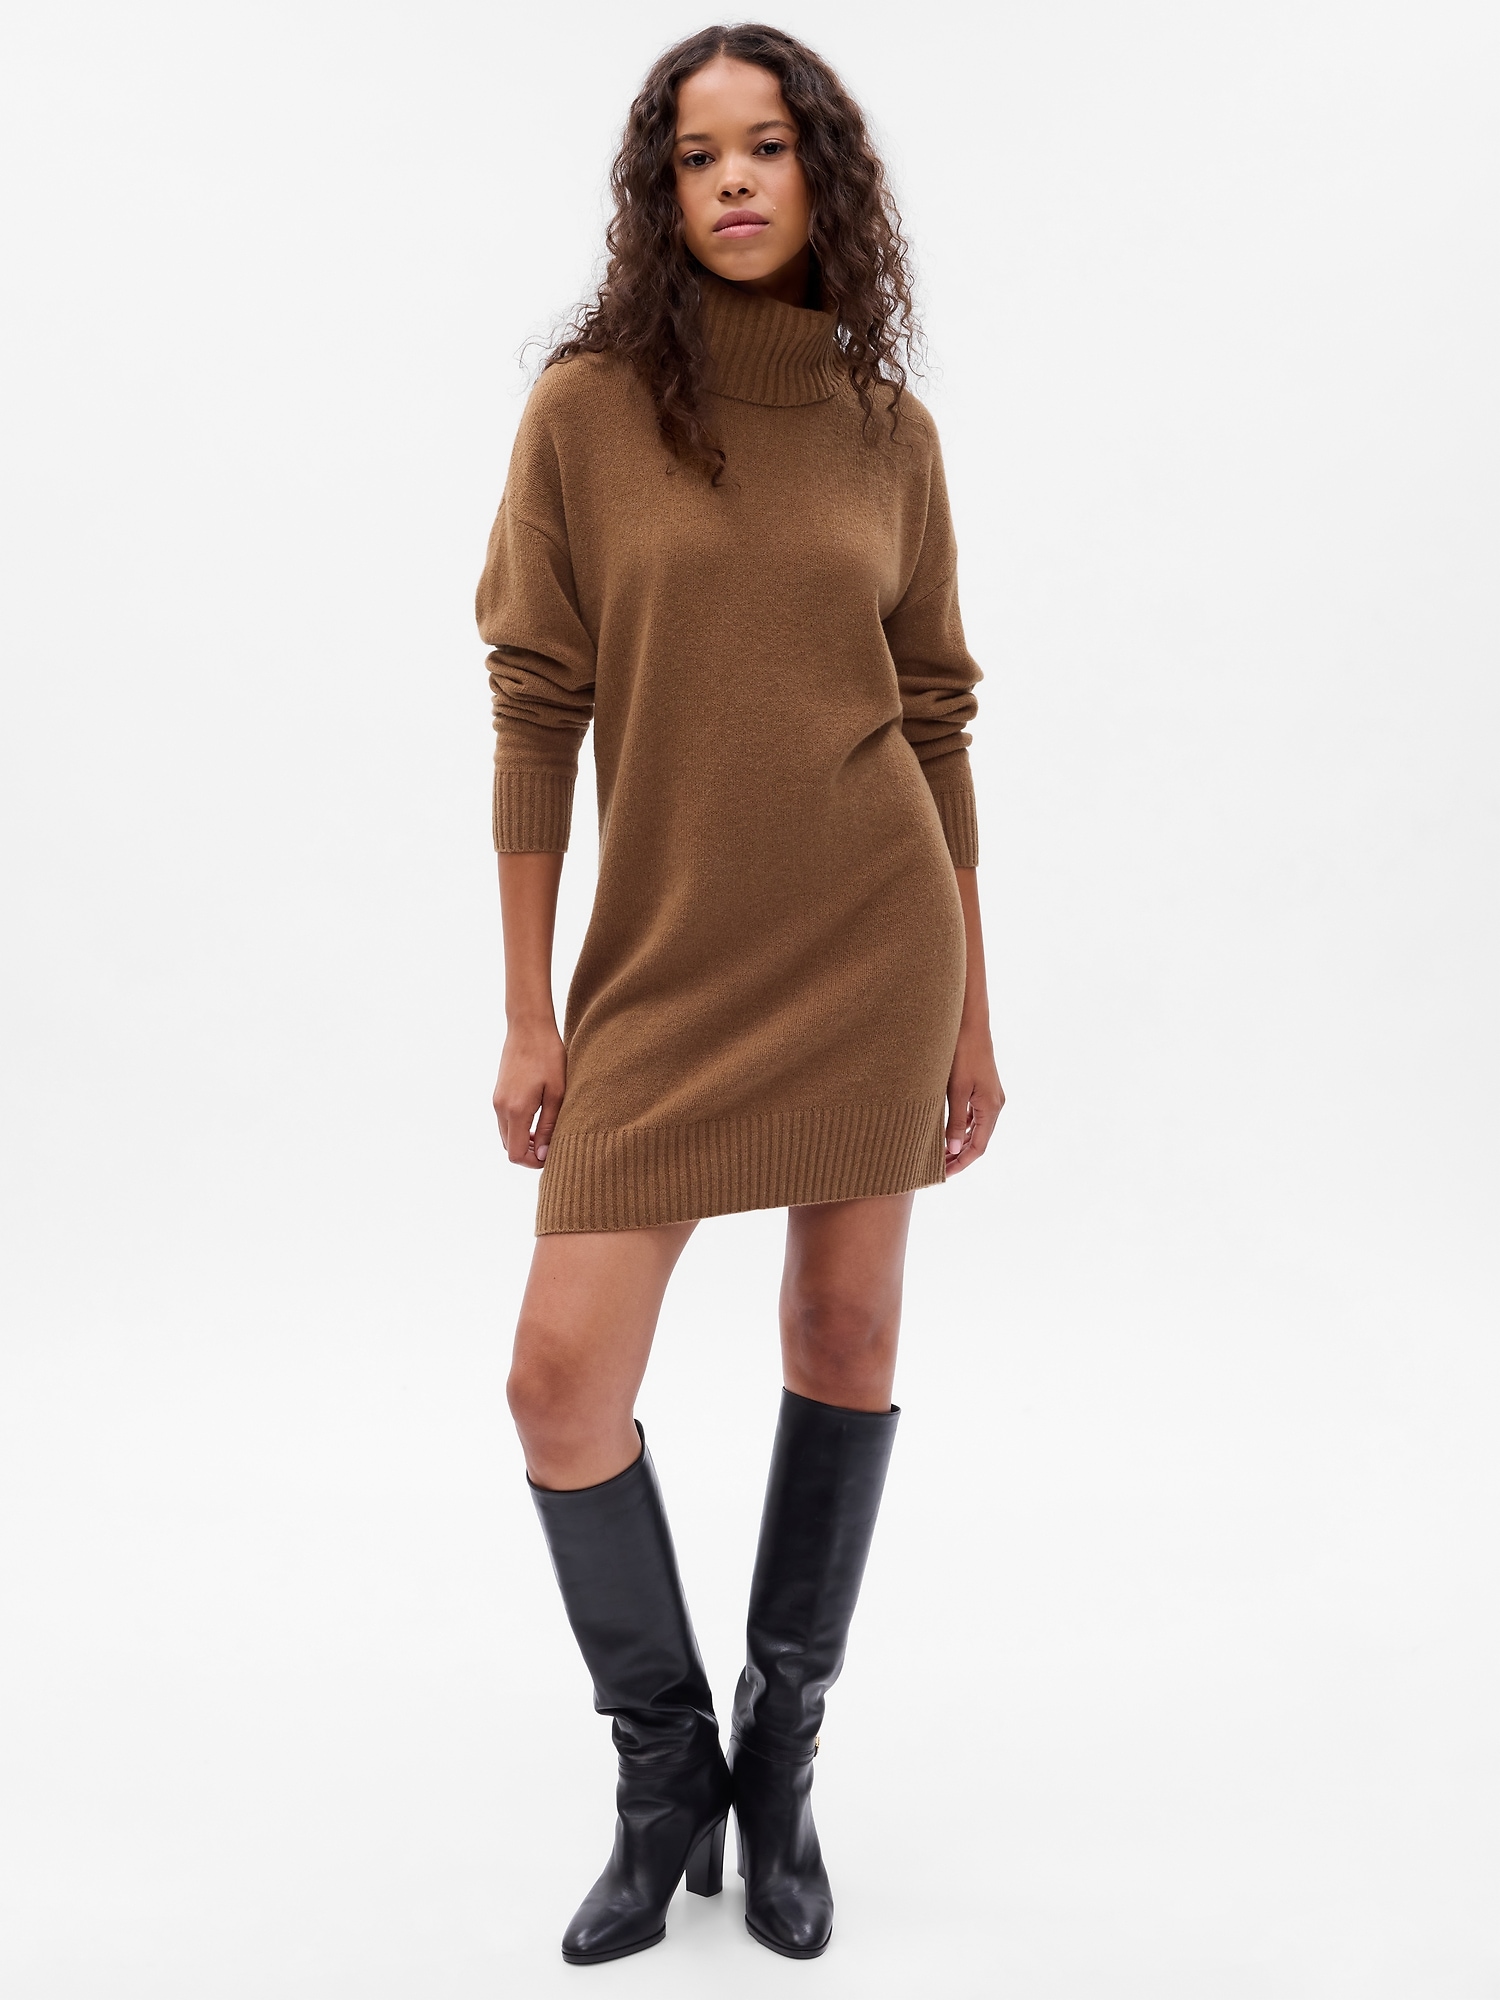 CashSoft Oversized Mini Sweater Dress | Gap